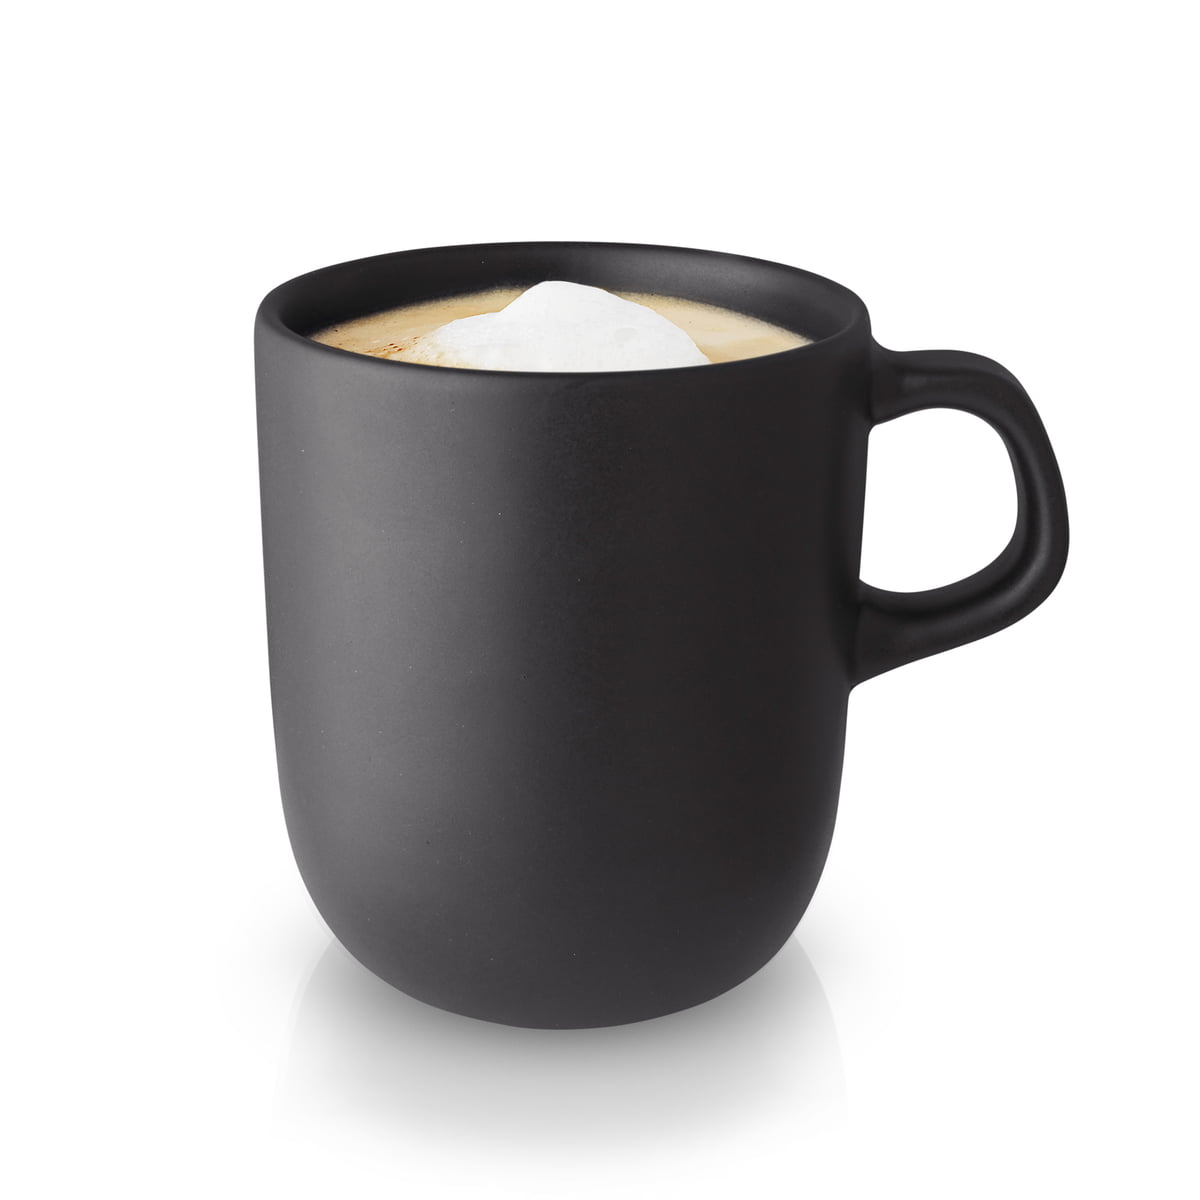 Tasse Danzig Fahne Flagge Mug Cup Kaffeetasse